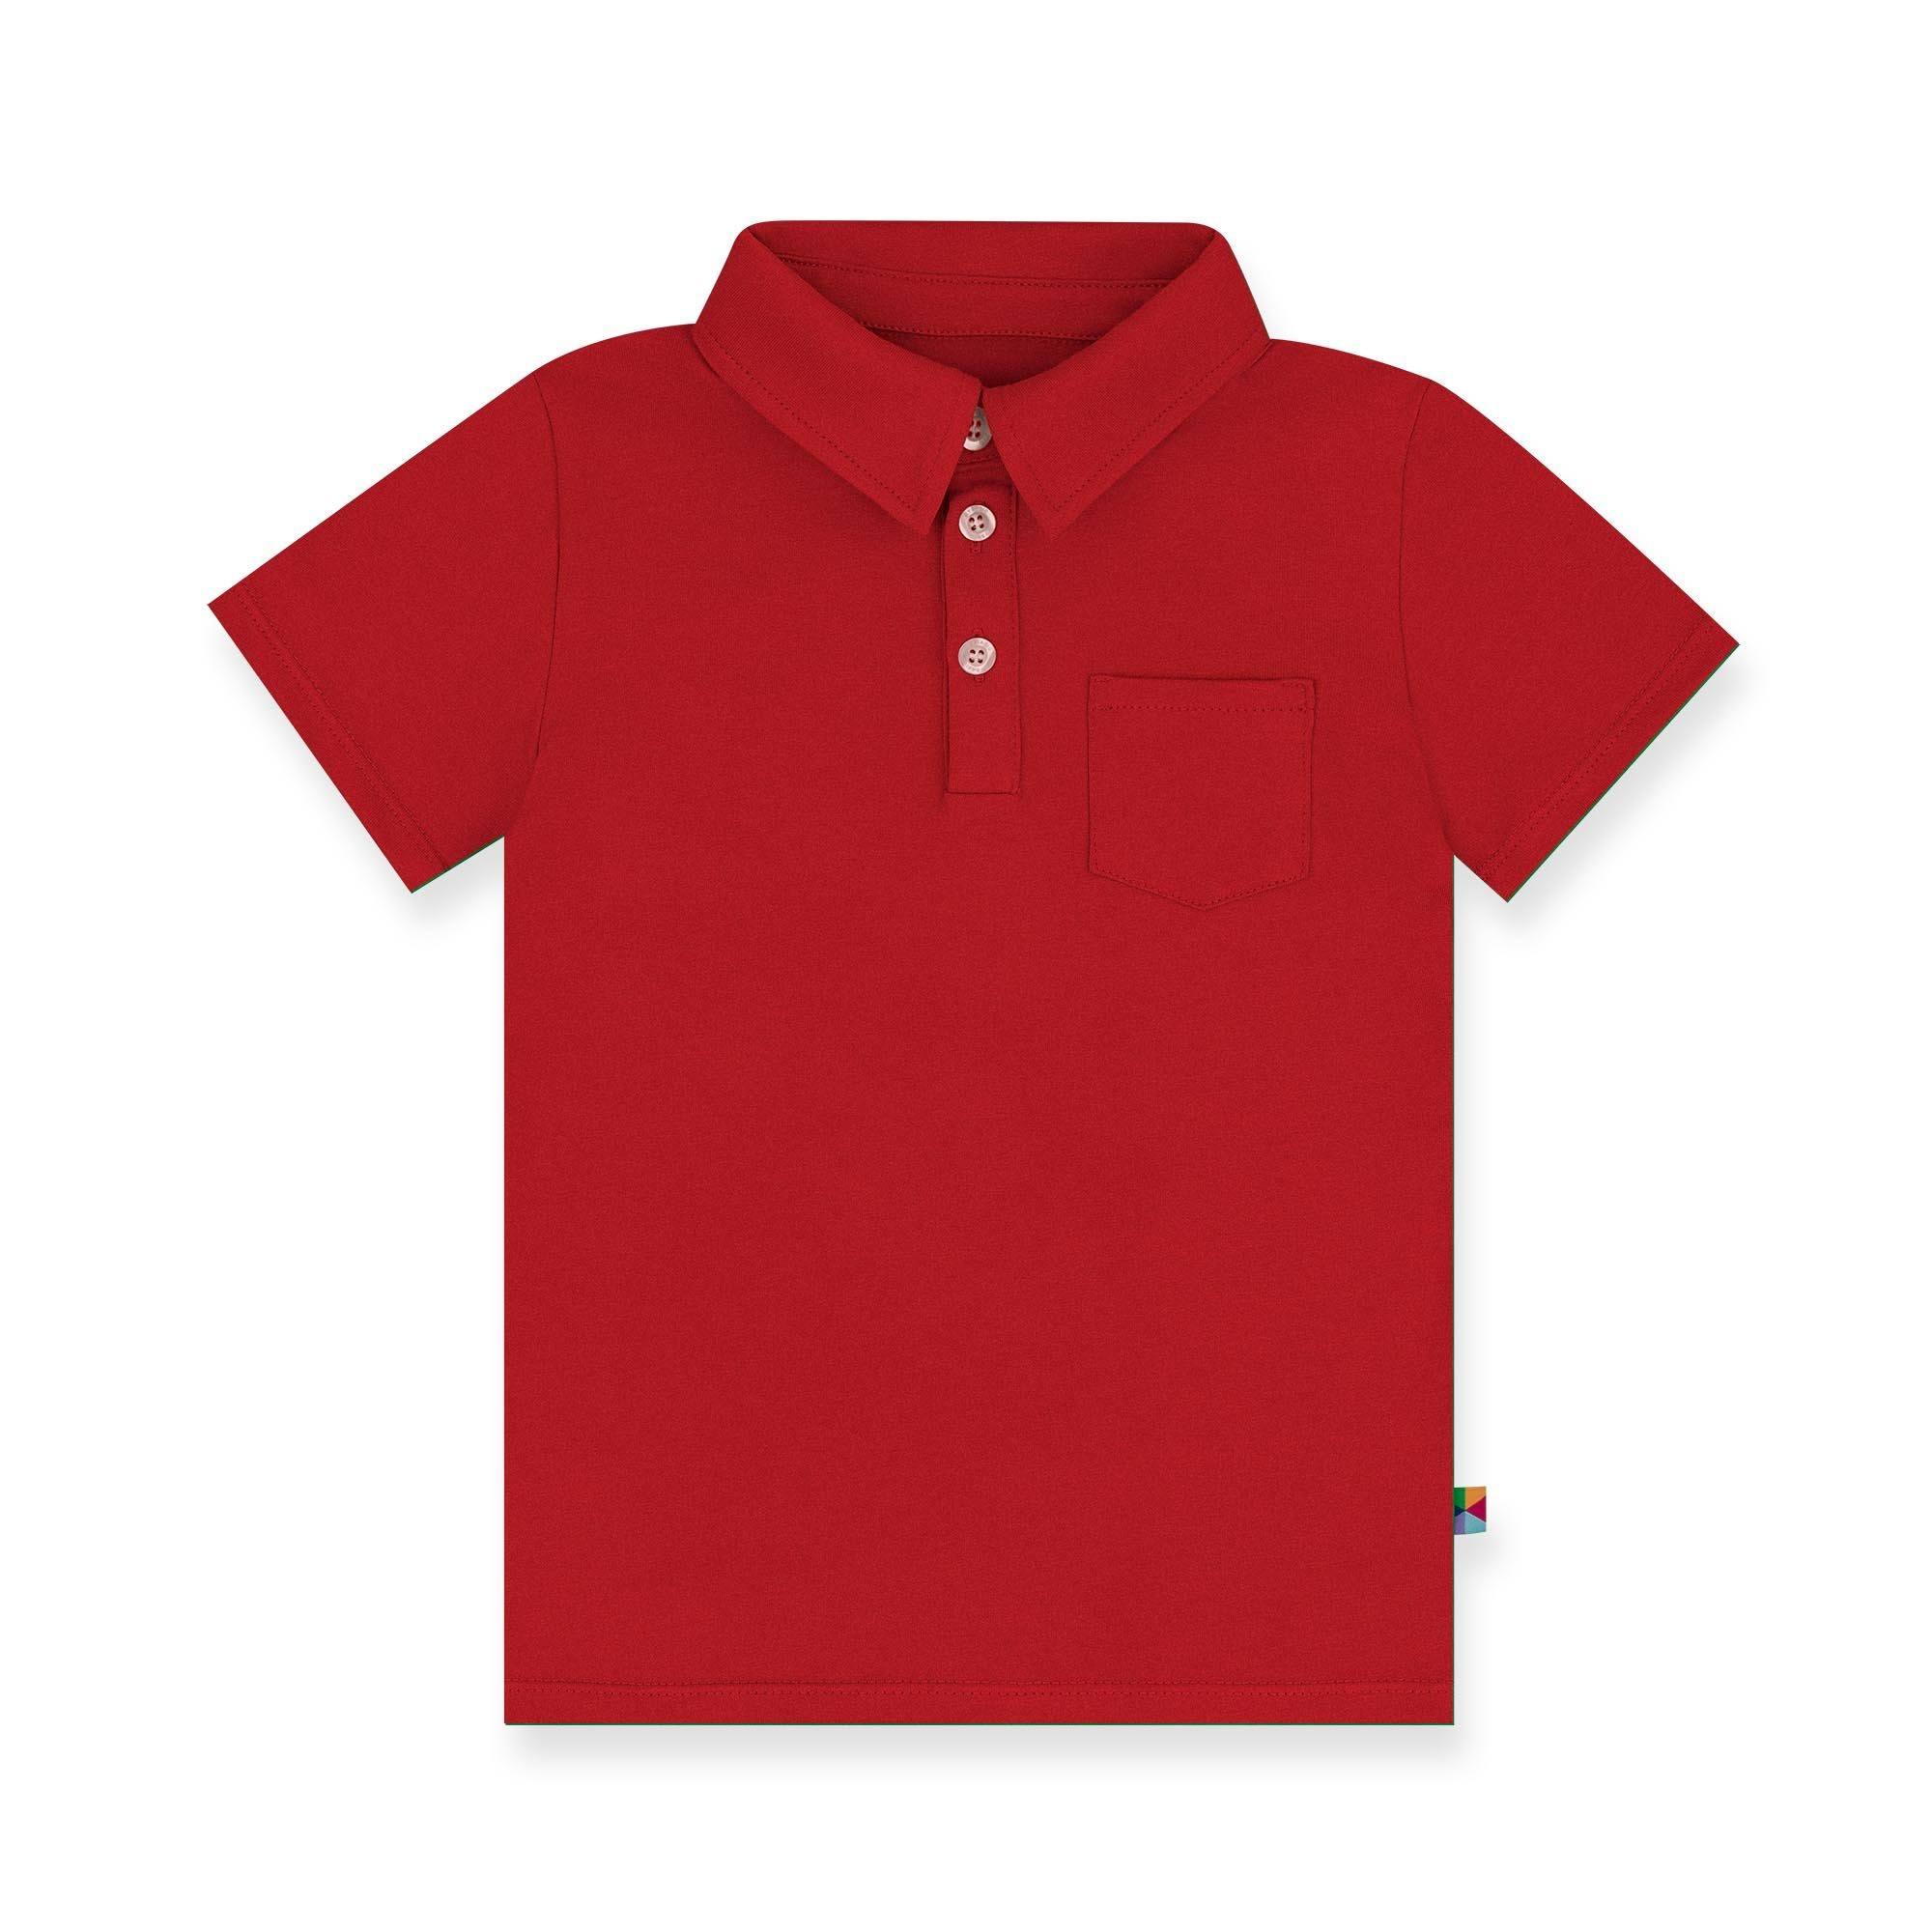 Czerwona koszulka polo